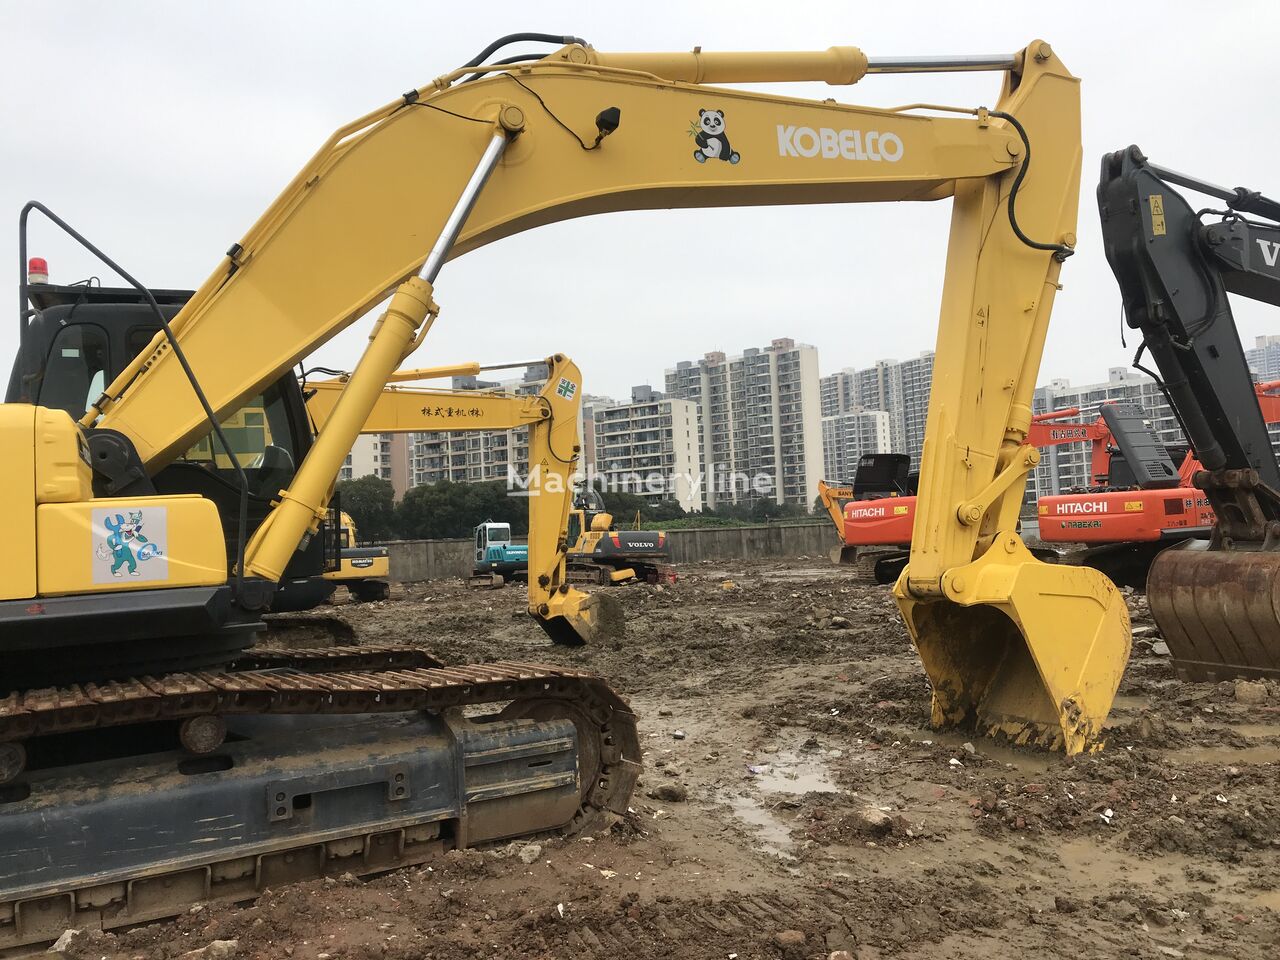 Kobelco SK350 tracked excavator